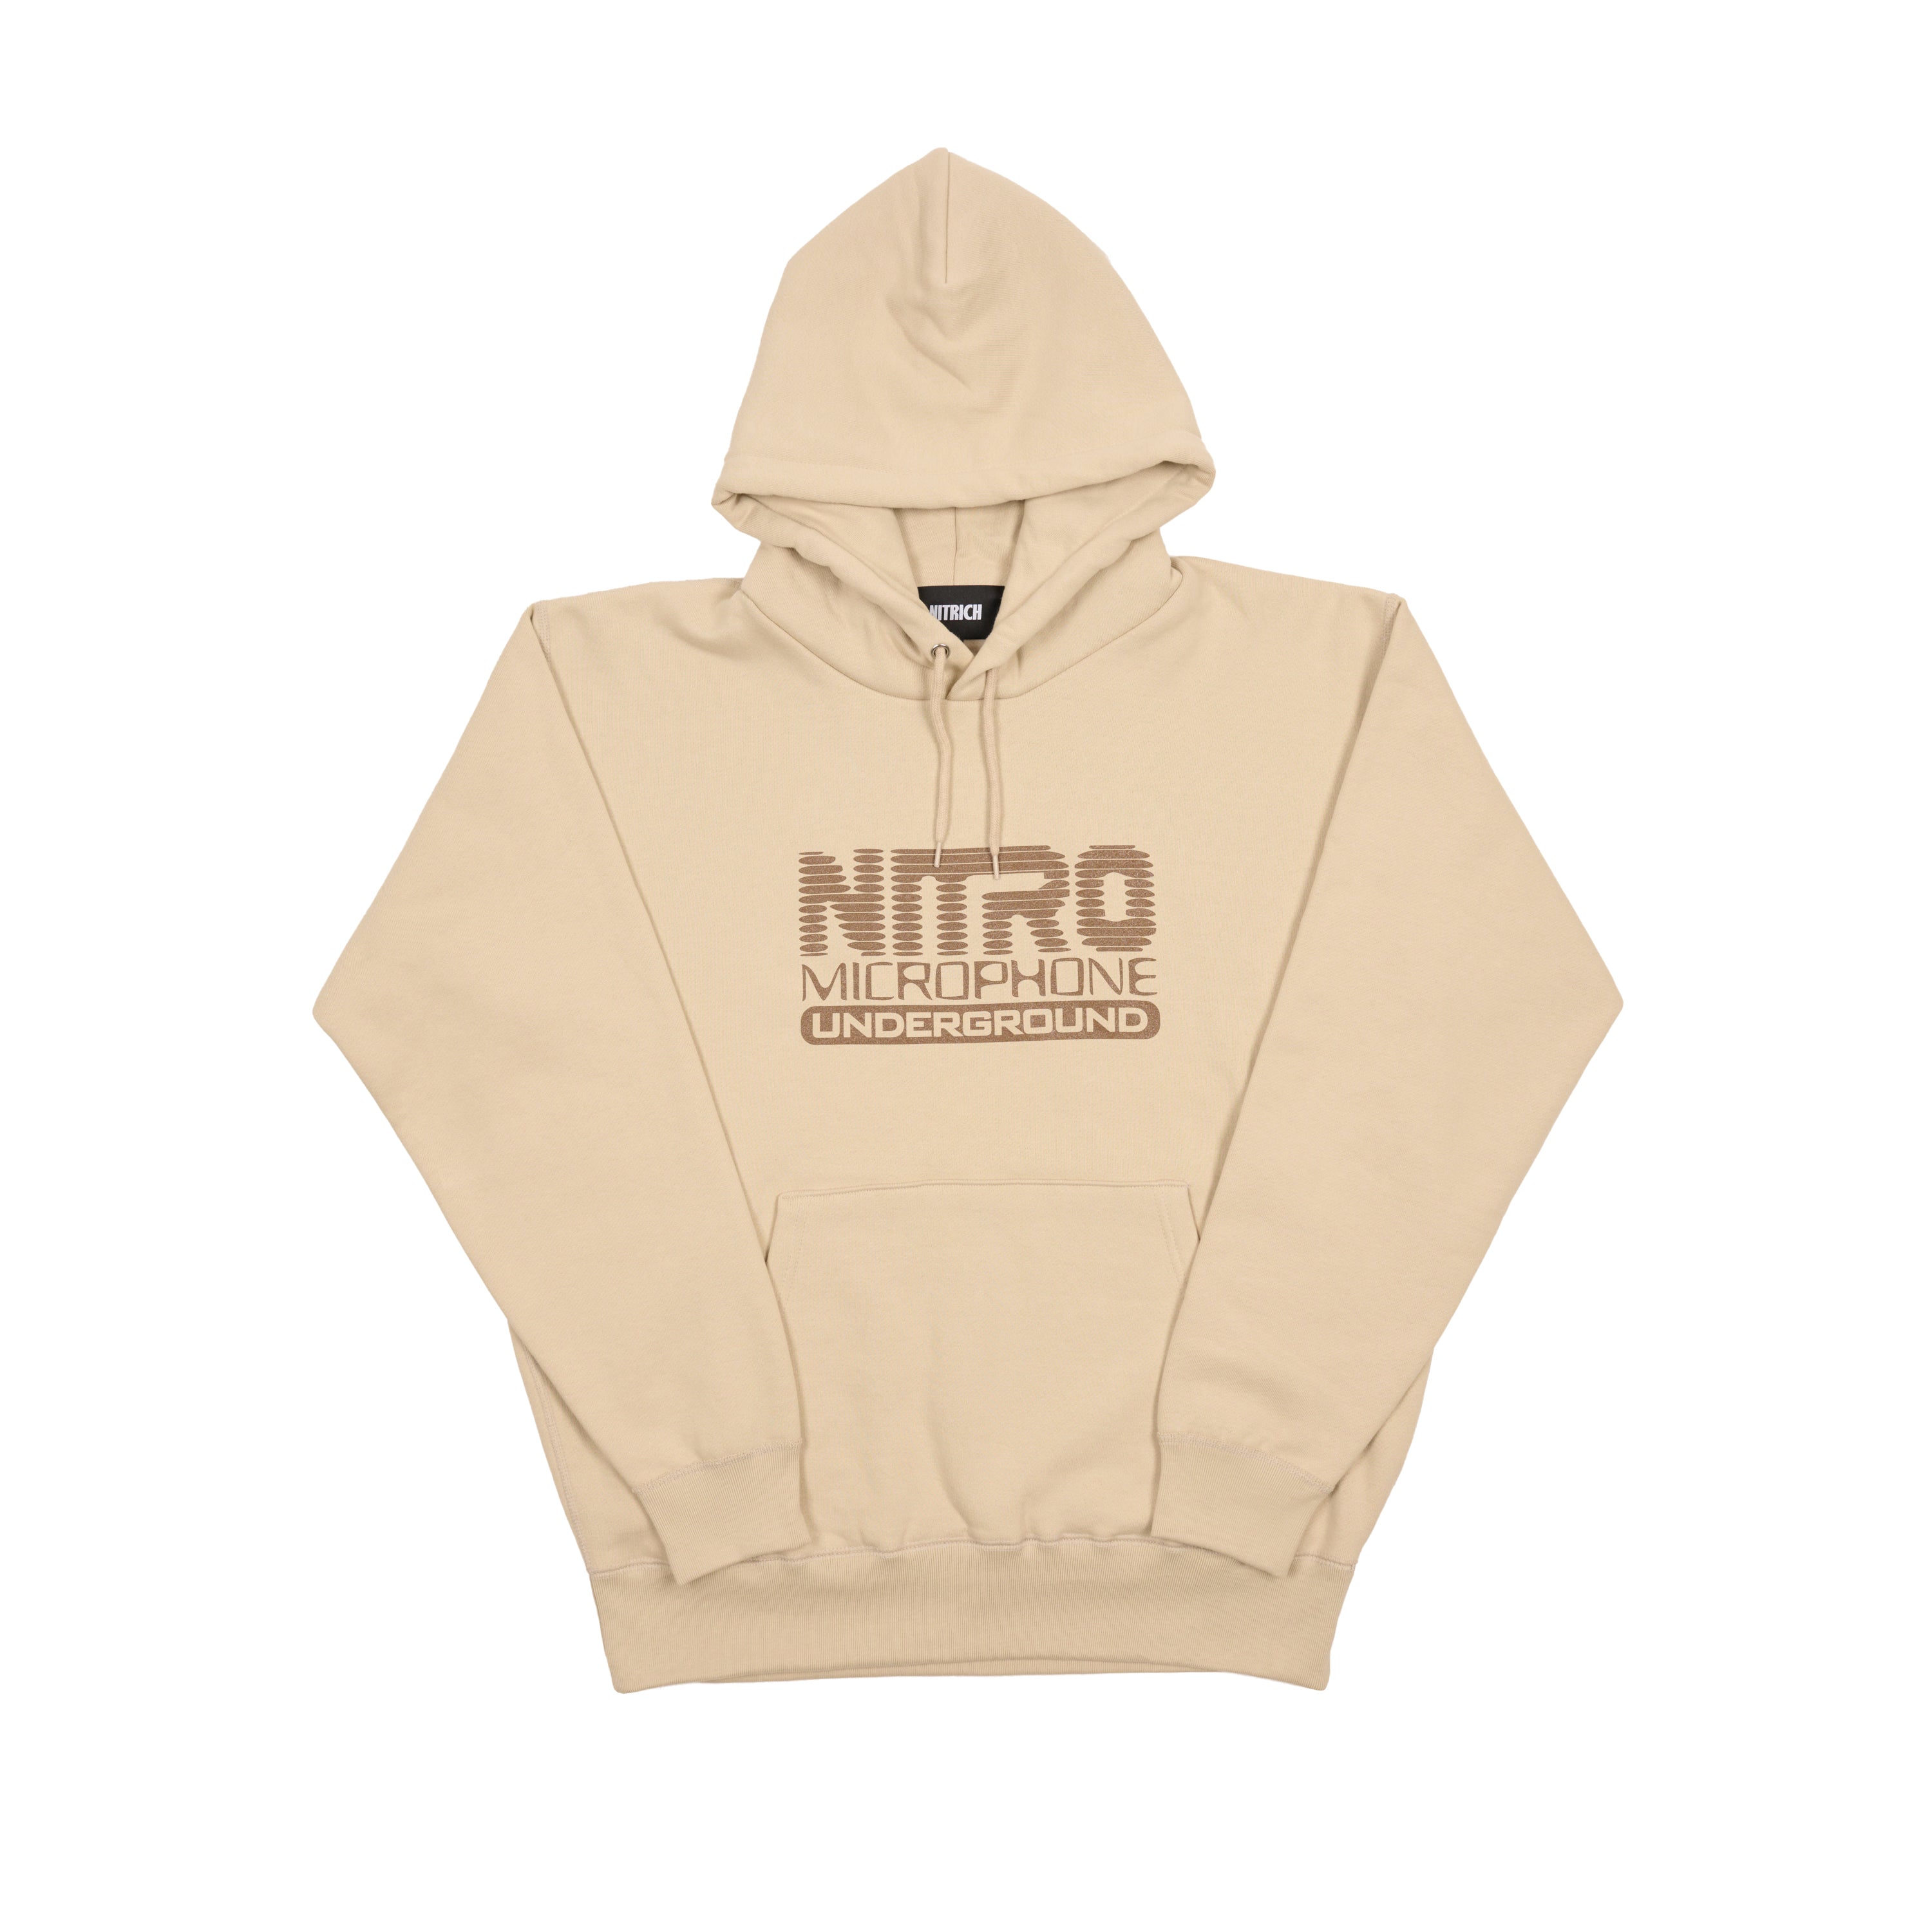 nitro microphone underground logo hoodie